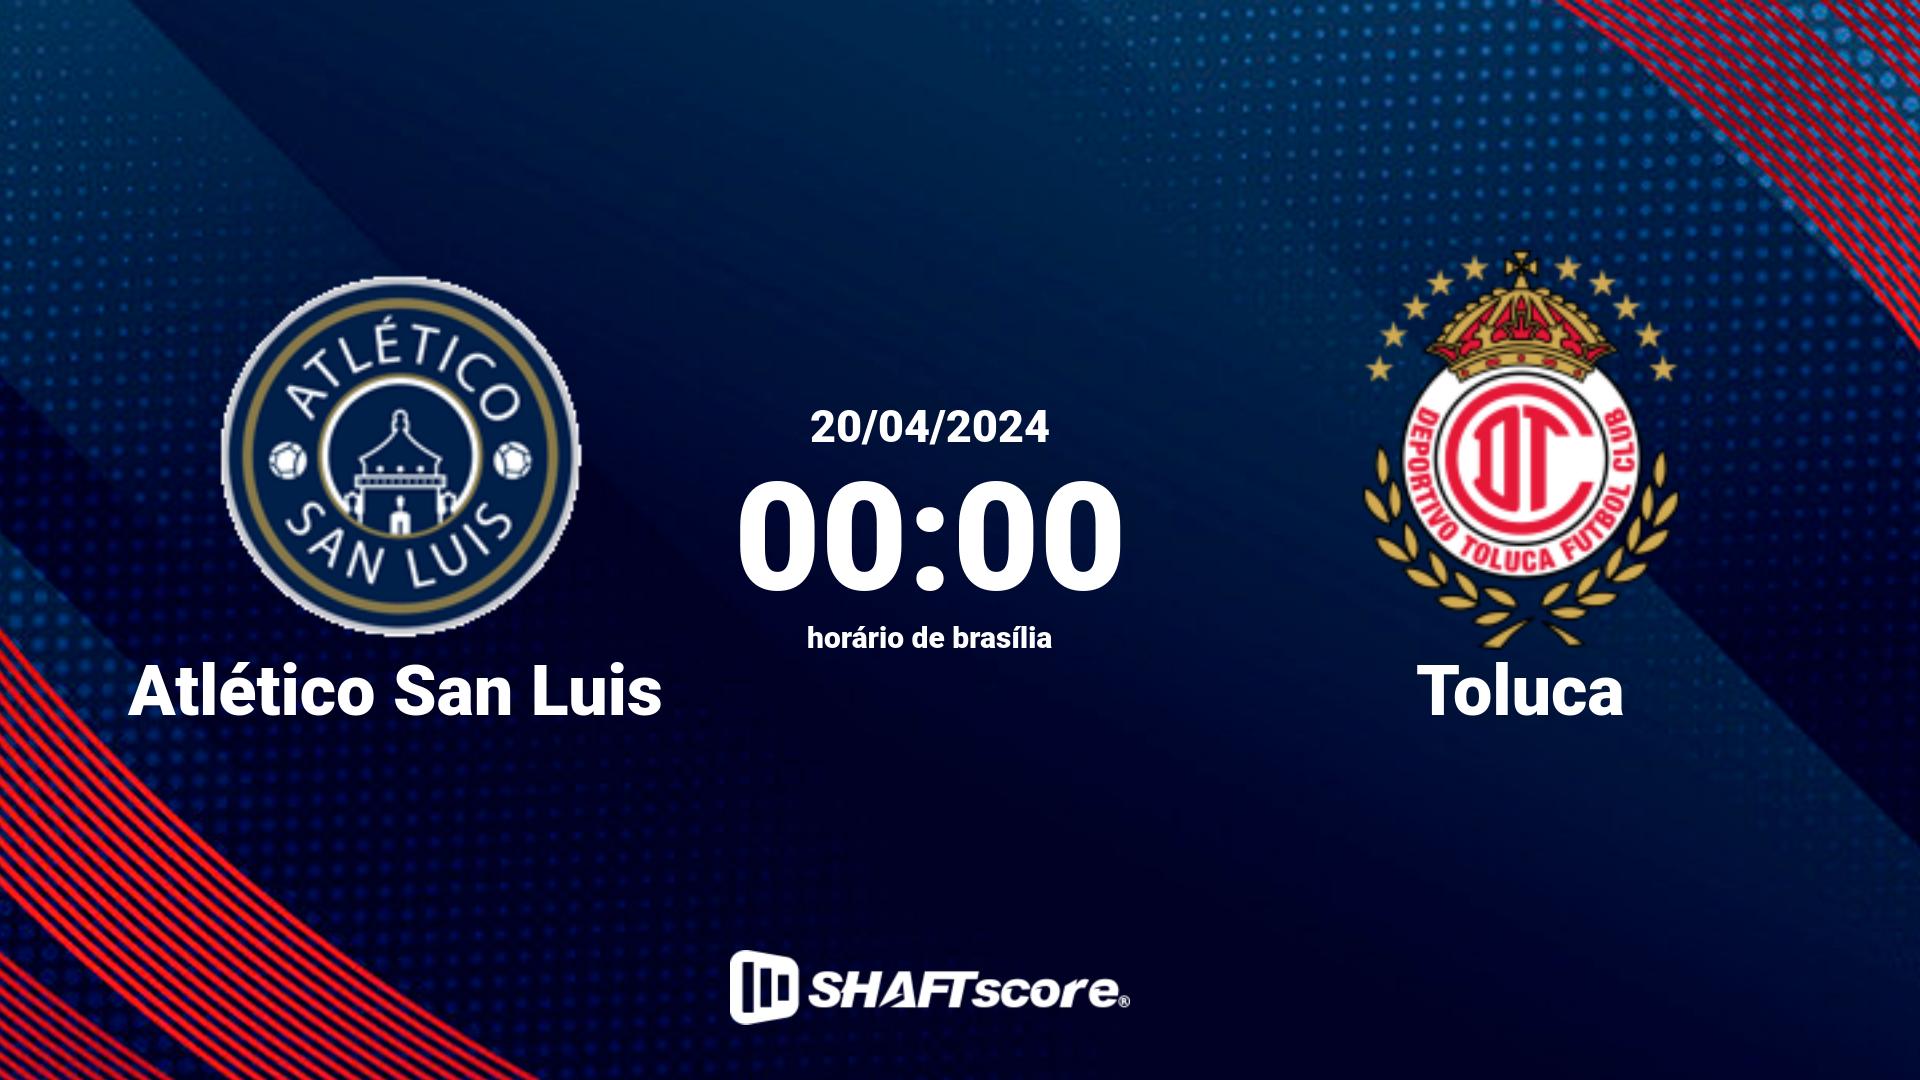 Estatísticas do jogo Atlético San Luis vs Toluca 20.04 00:00